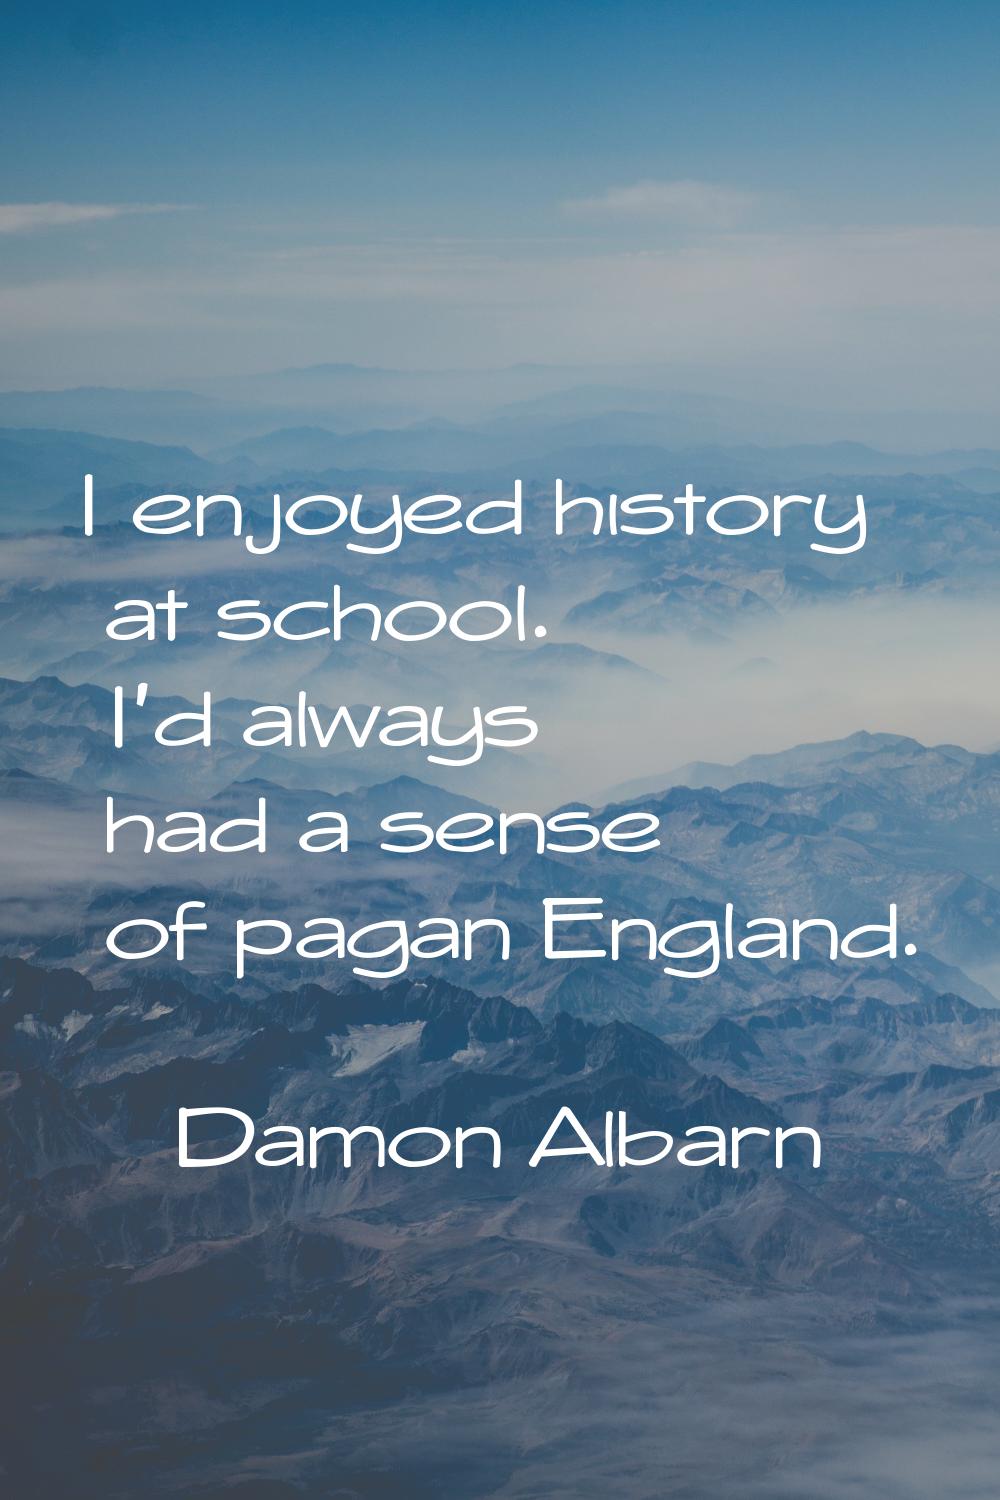 I enjoyed history at school. I'd always had a sense of pagan England.